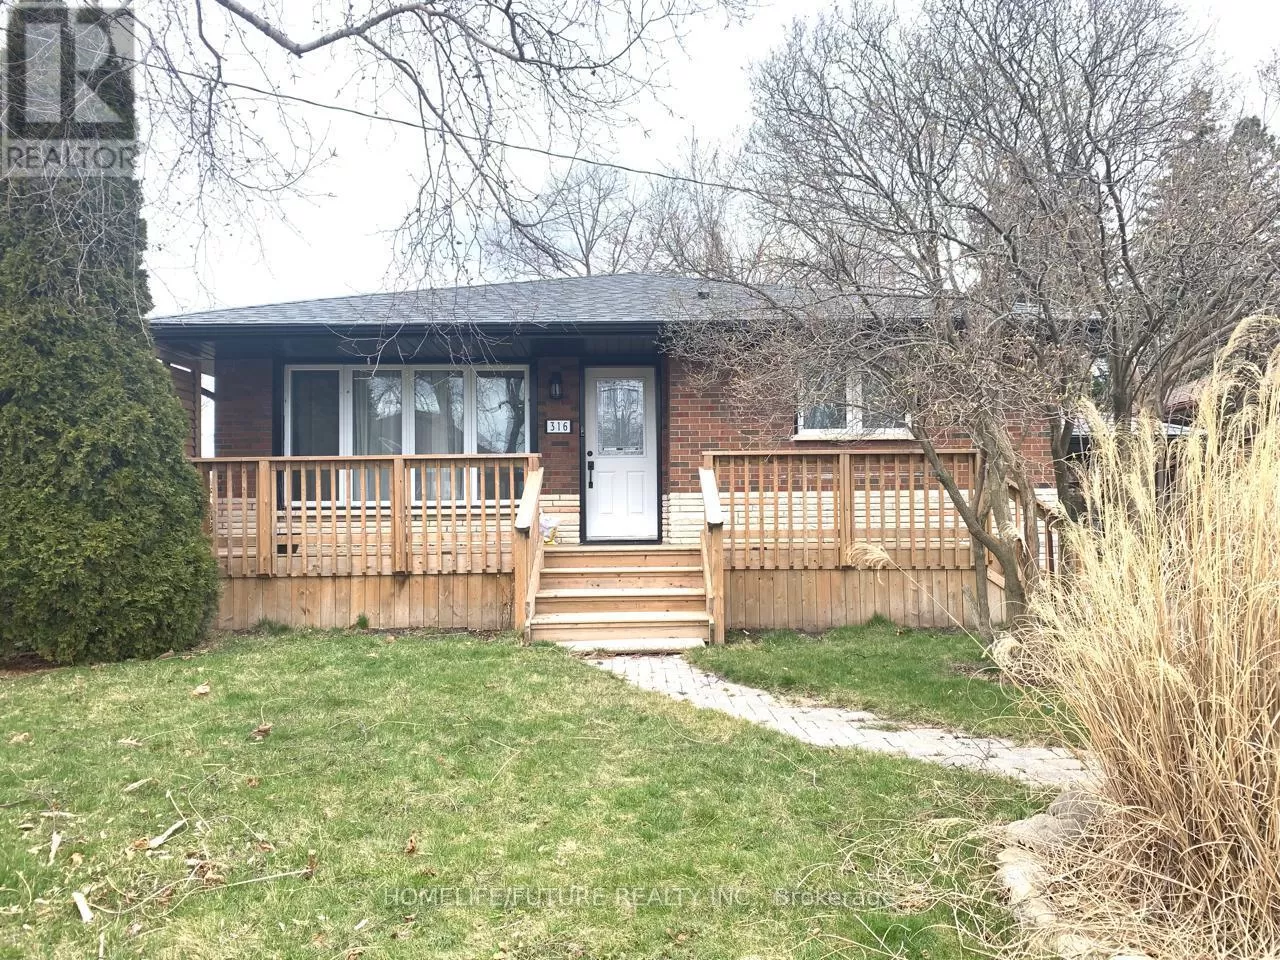 House for rent: 316 Walmer Rd, Oshawa, Ontario L1J 2Z7